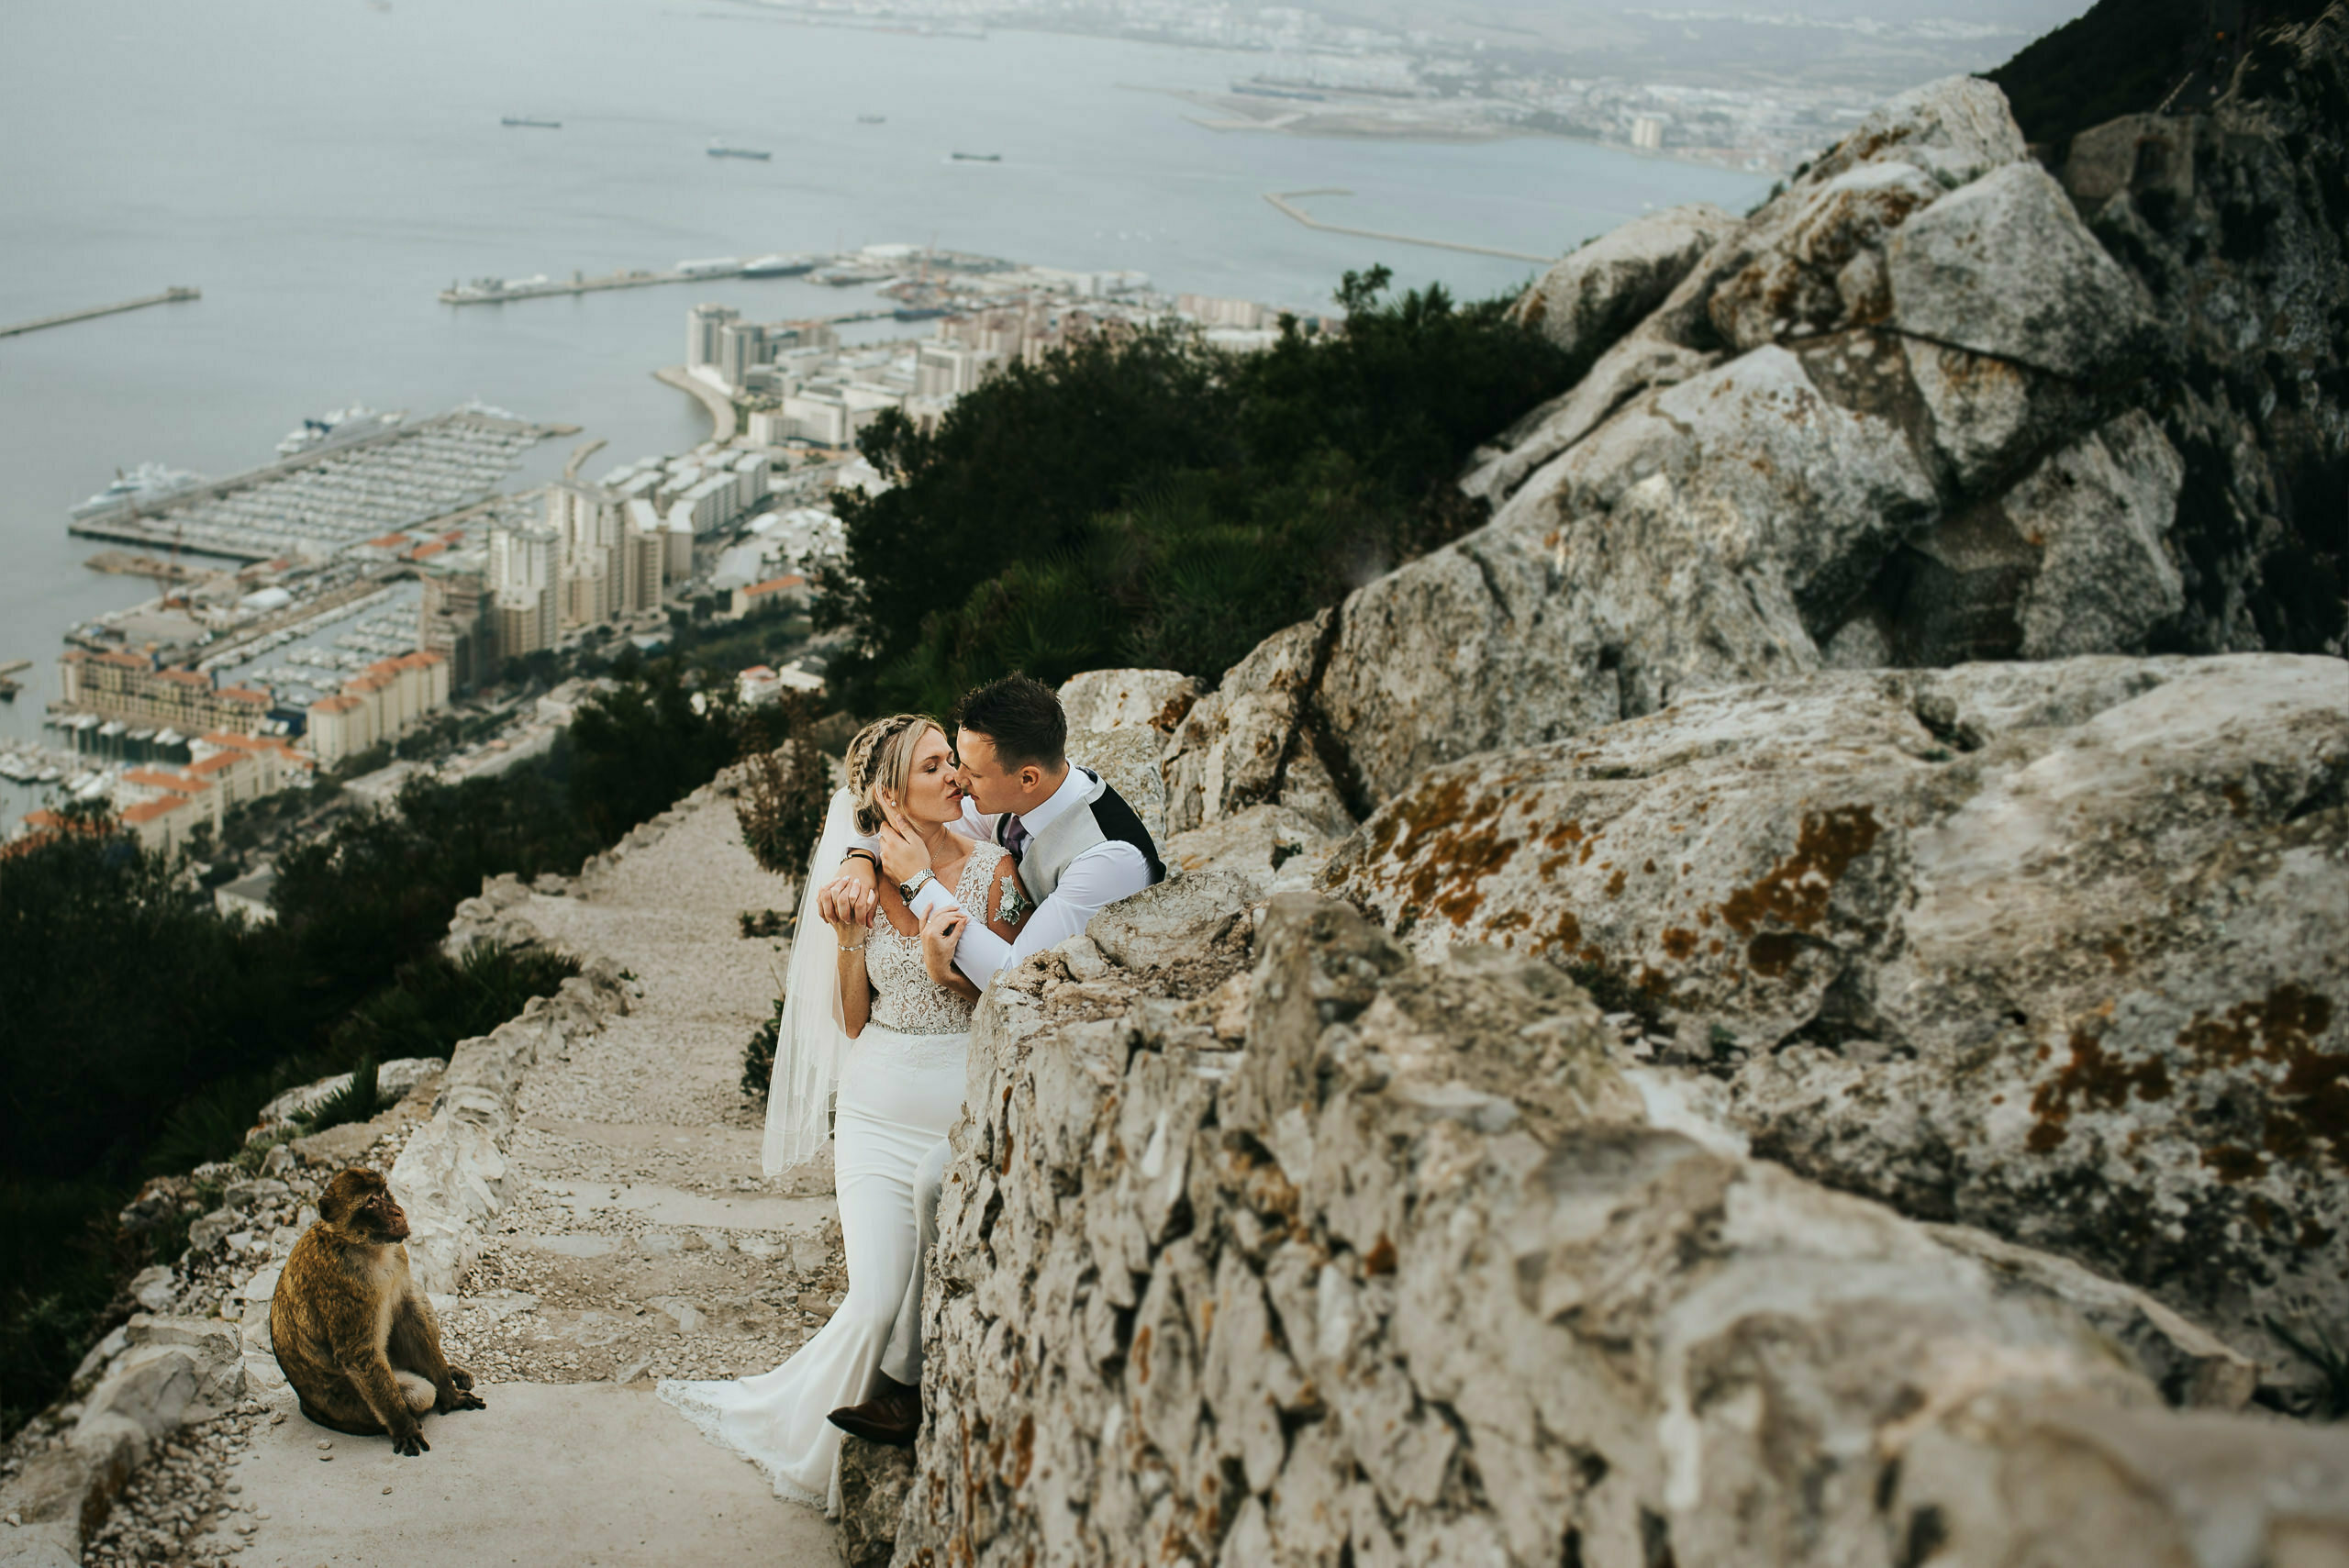 Destination Wedding Photography f 2 - Destination Wedding Photography -Gibraltar 1